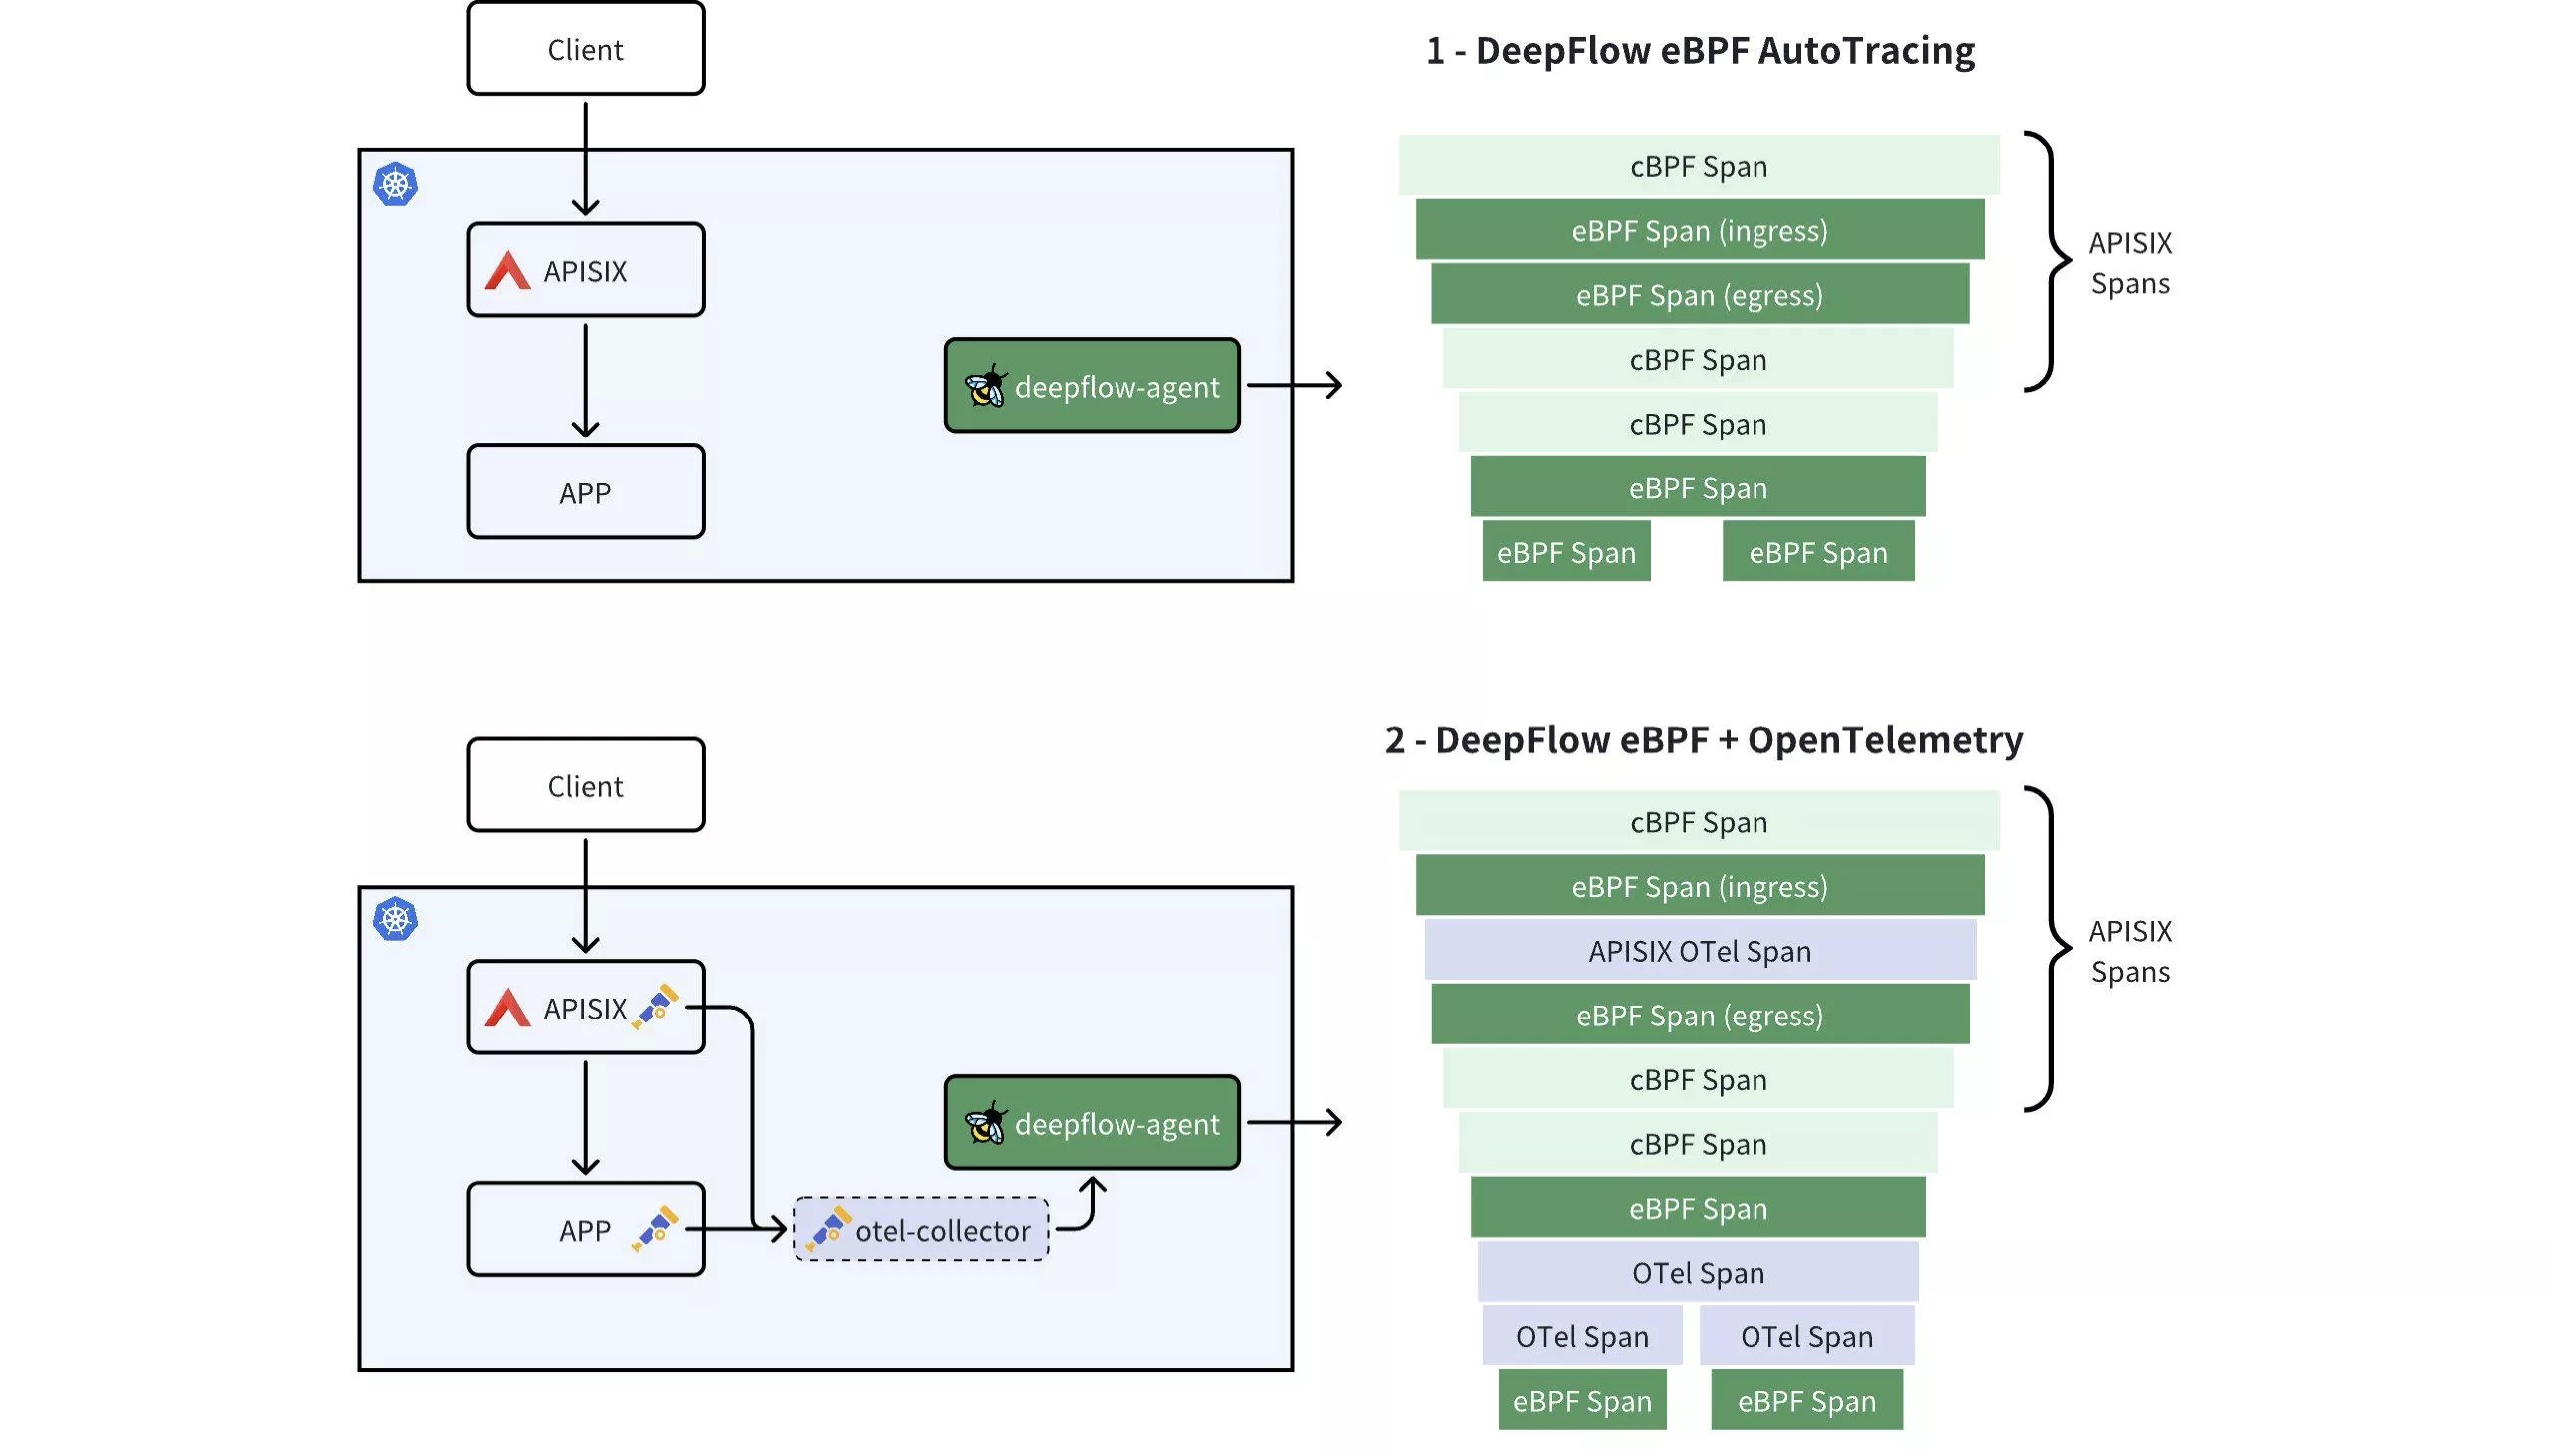 Integrating APISIX with DeepFlow